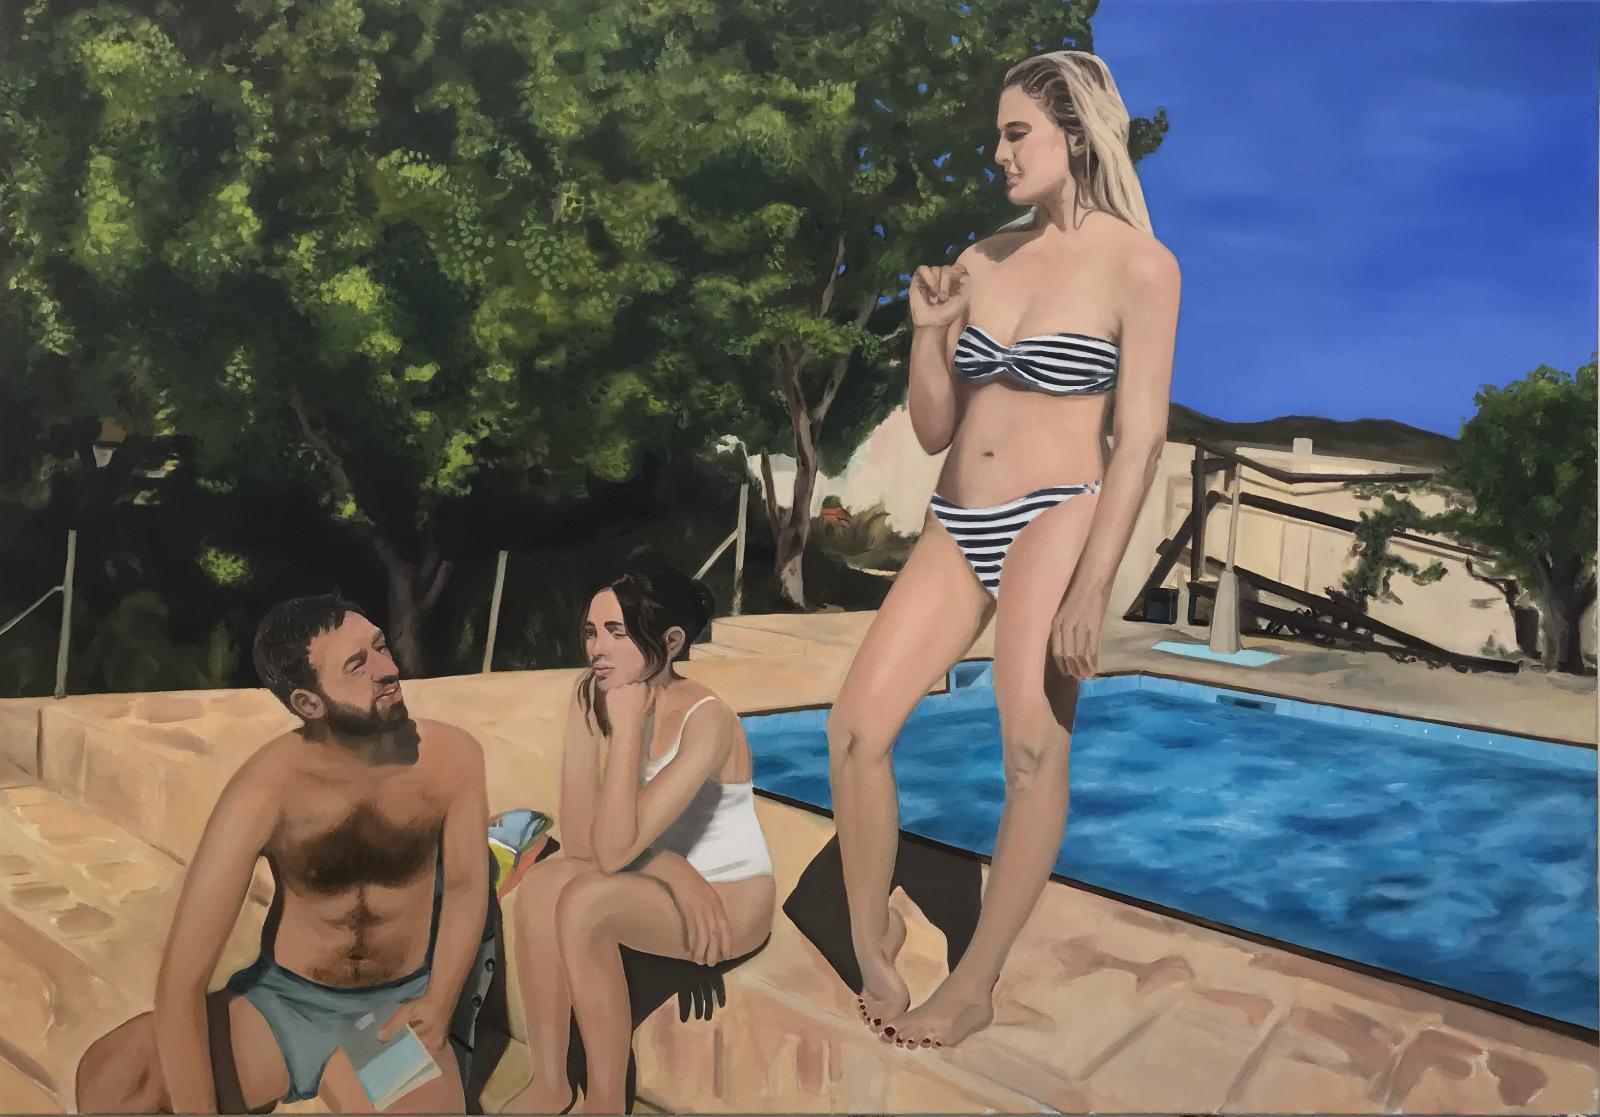 Janka Zöller, Pablo, Alina and I at the pool, 2018, Öl auf Leinwand, 140 cm x 200 cm